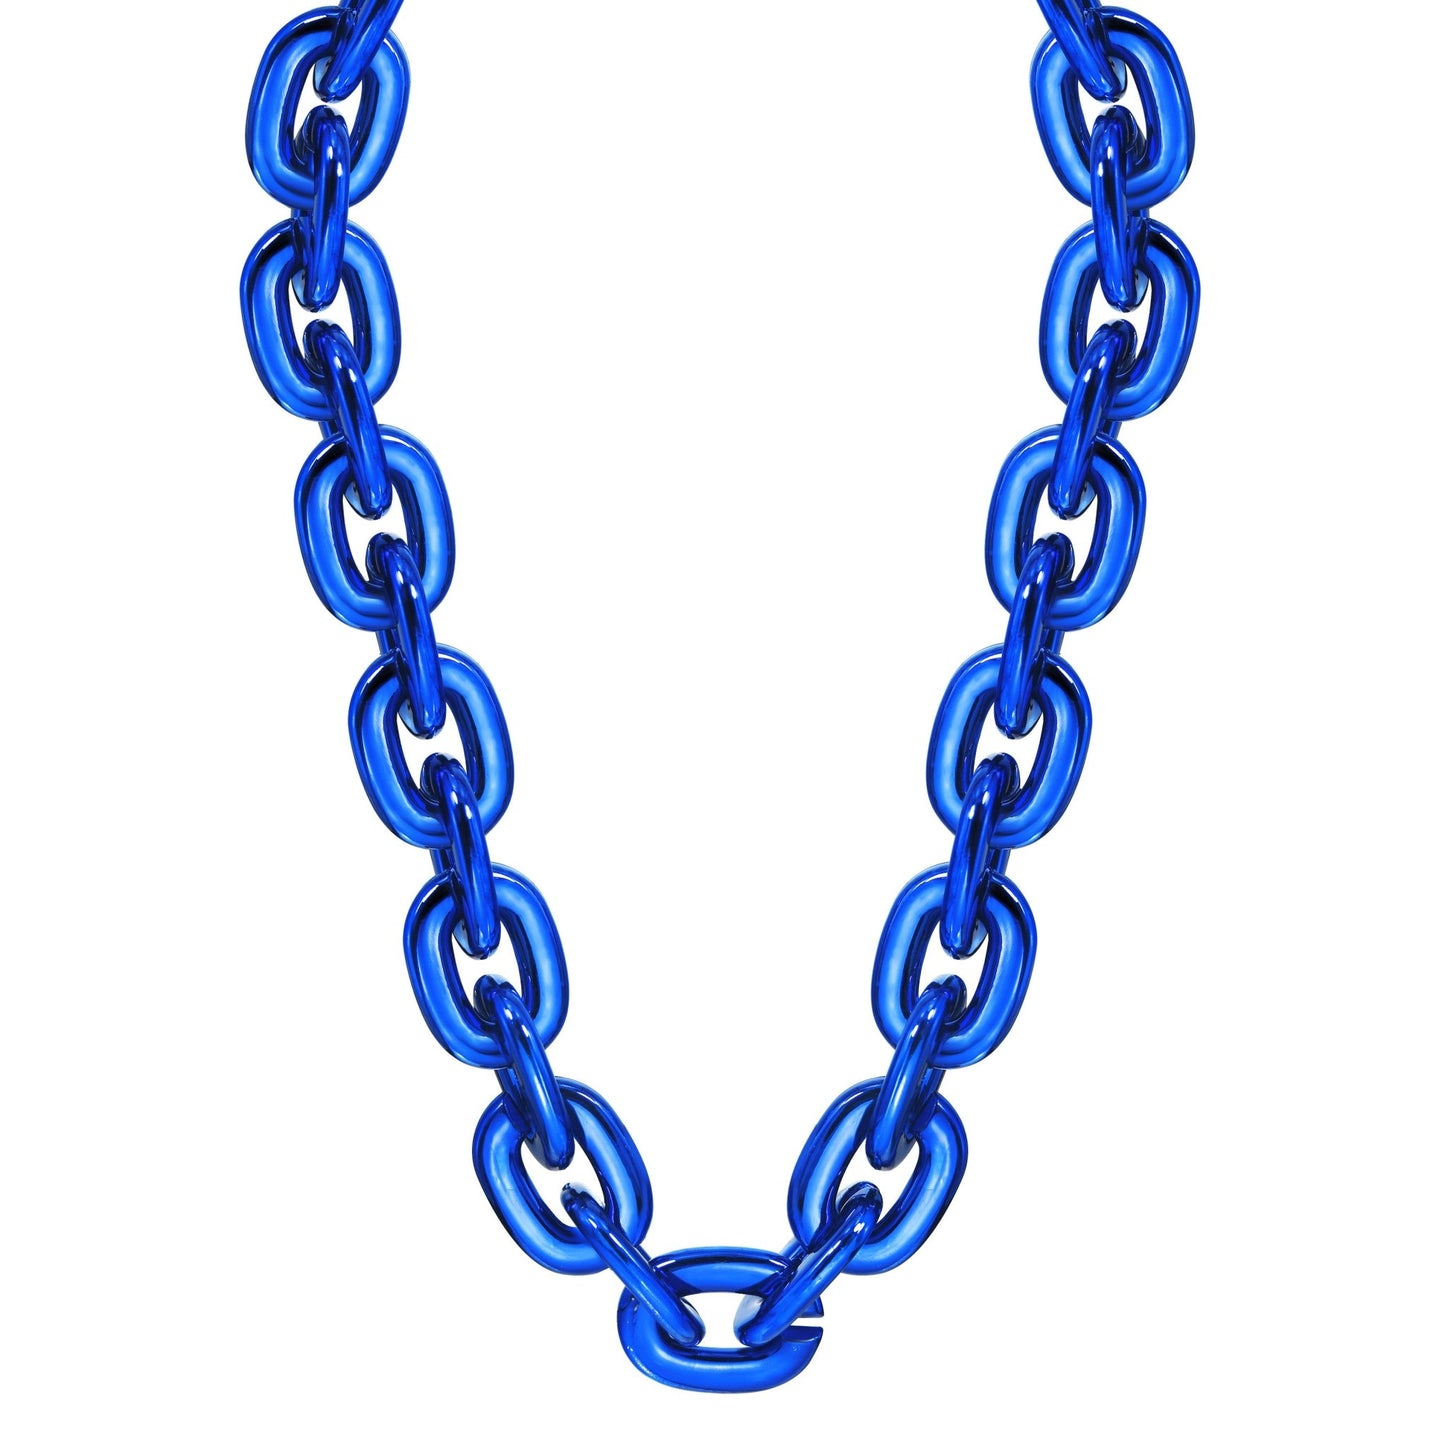 Jumbo Fan Chain Necklace - Gamedays Gear - Royal Blue